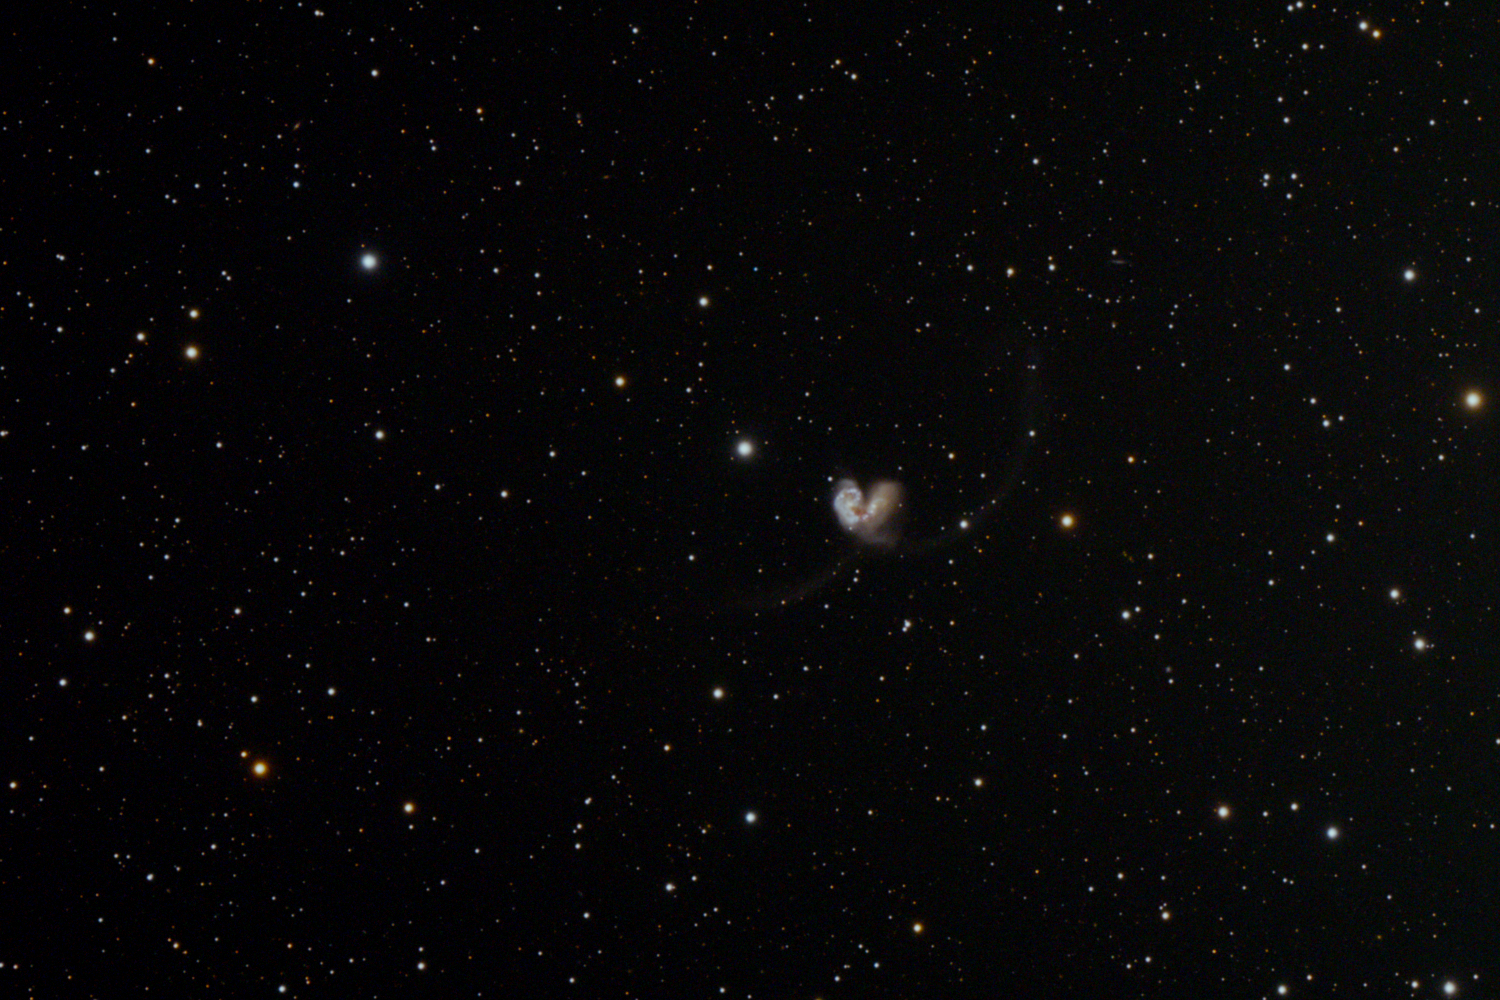 NGC 4038 and NGC 4039, The Antenna Galaxies